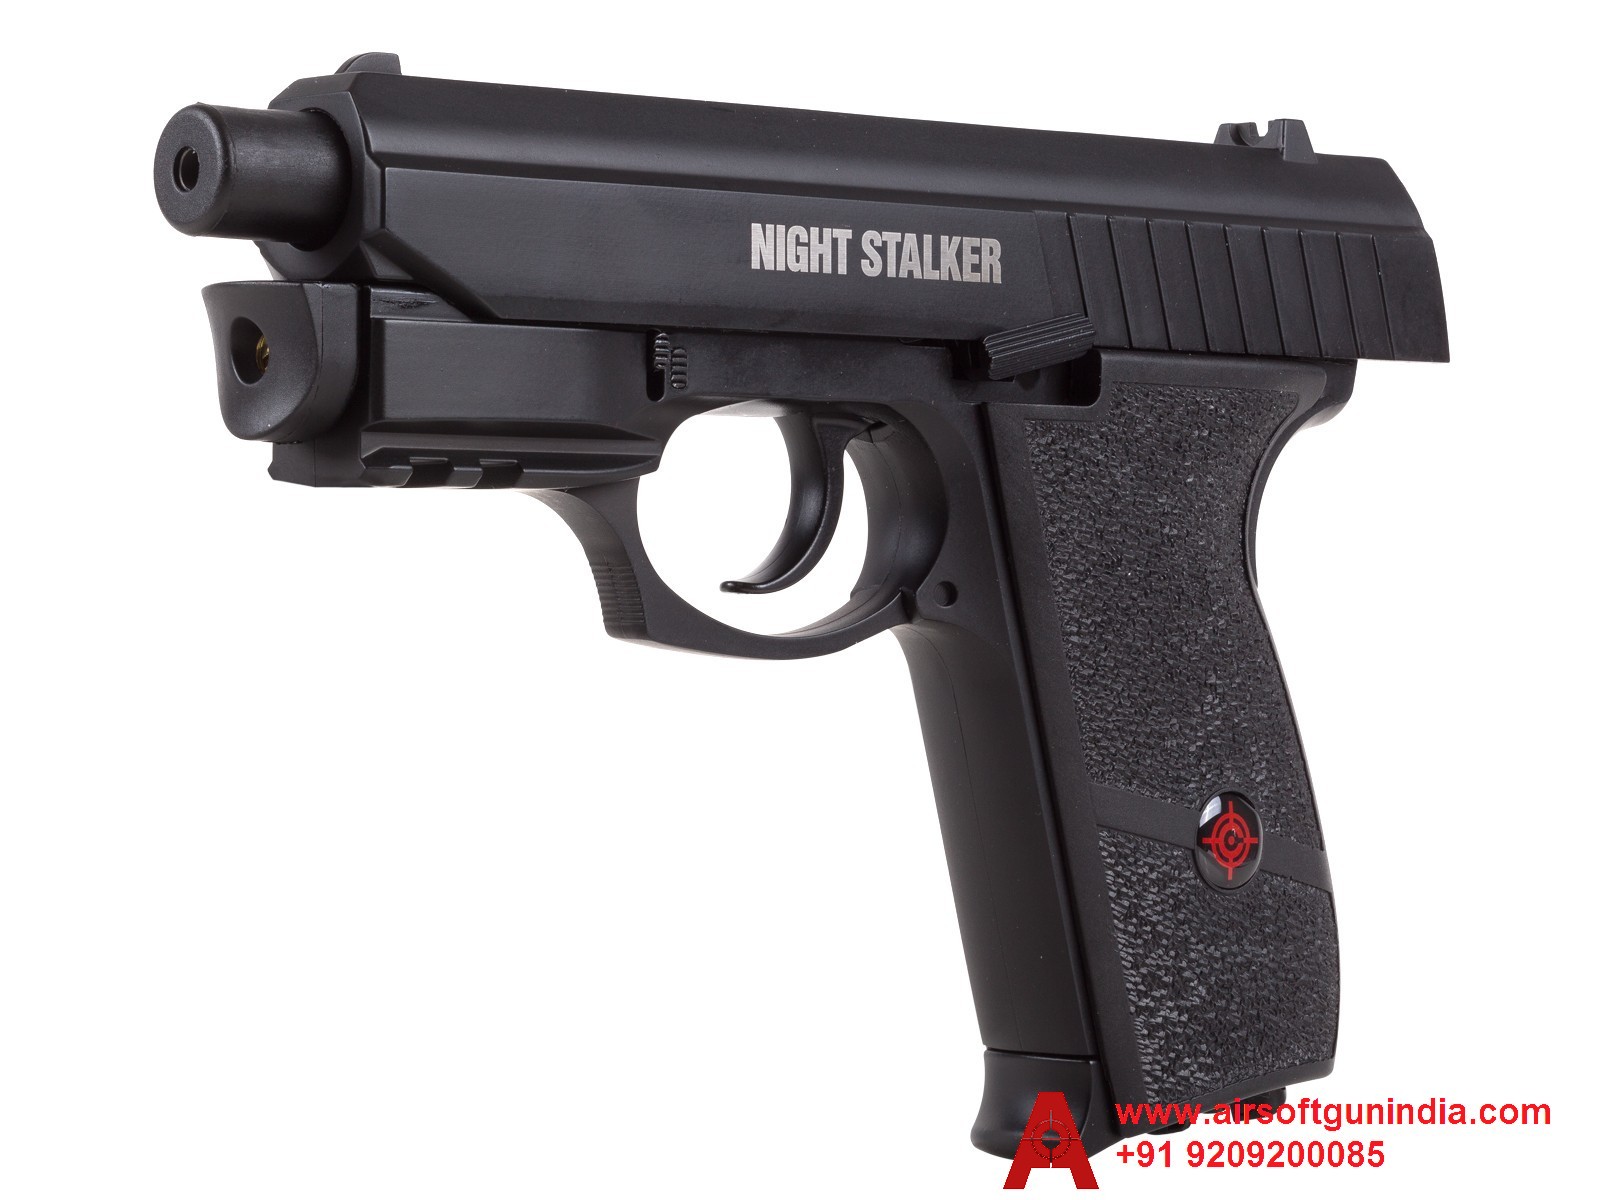 Crossman PFM520 Night Stalker CO2 BB .177Cal, 4.5mm Air Pistol By Airsoft Gun India